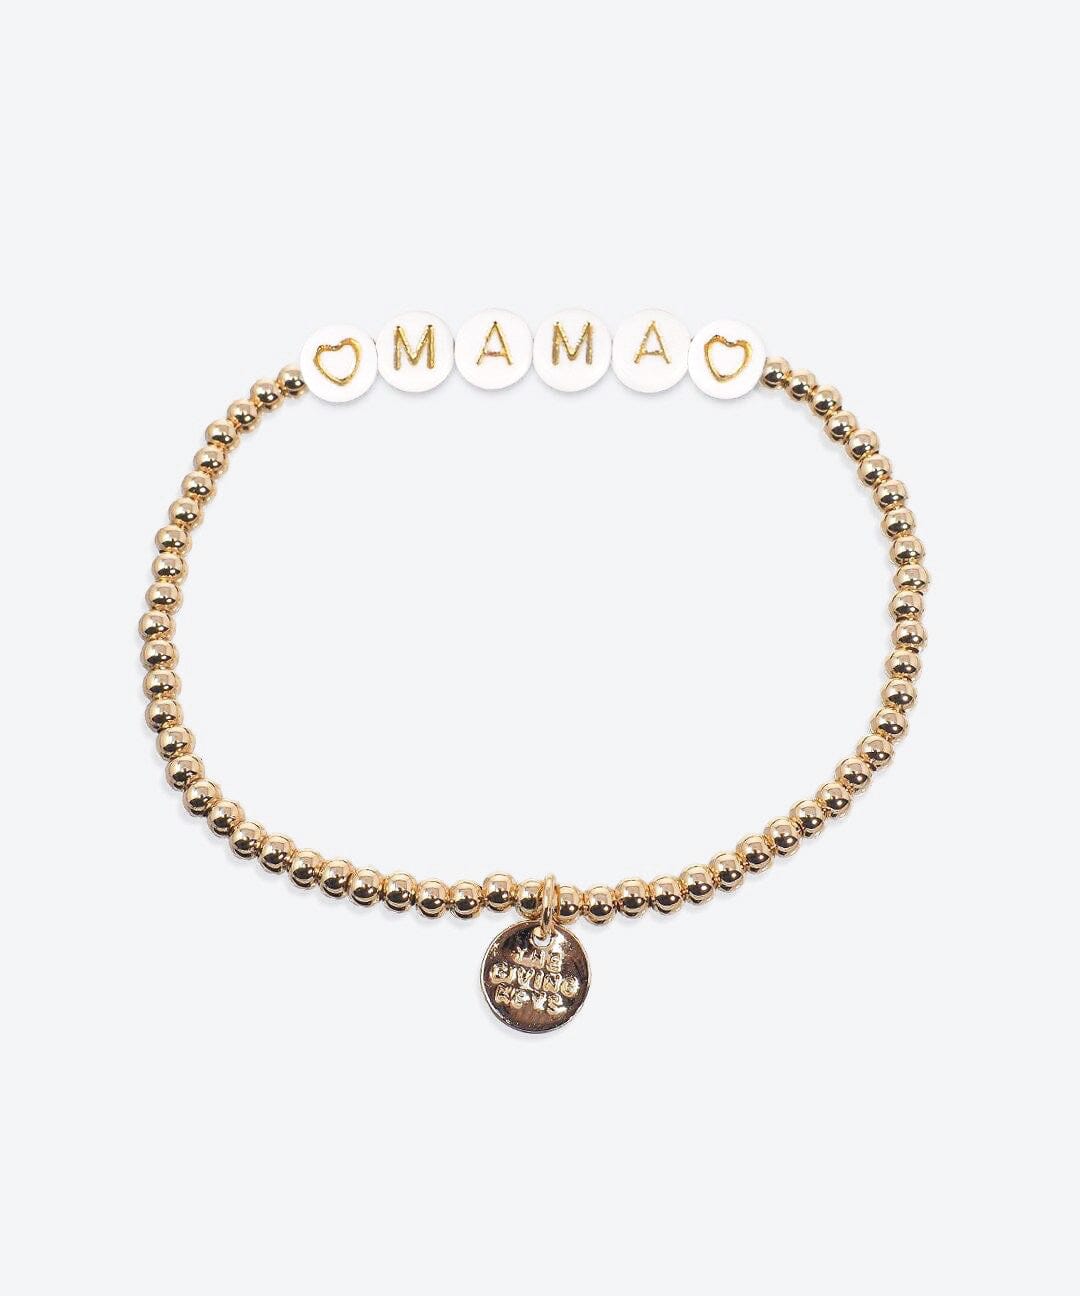 ♡MAMA♡ Beaded Bracelet Bracelets The Giving Keys GOLD 